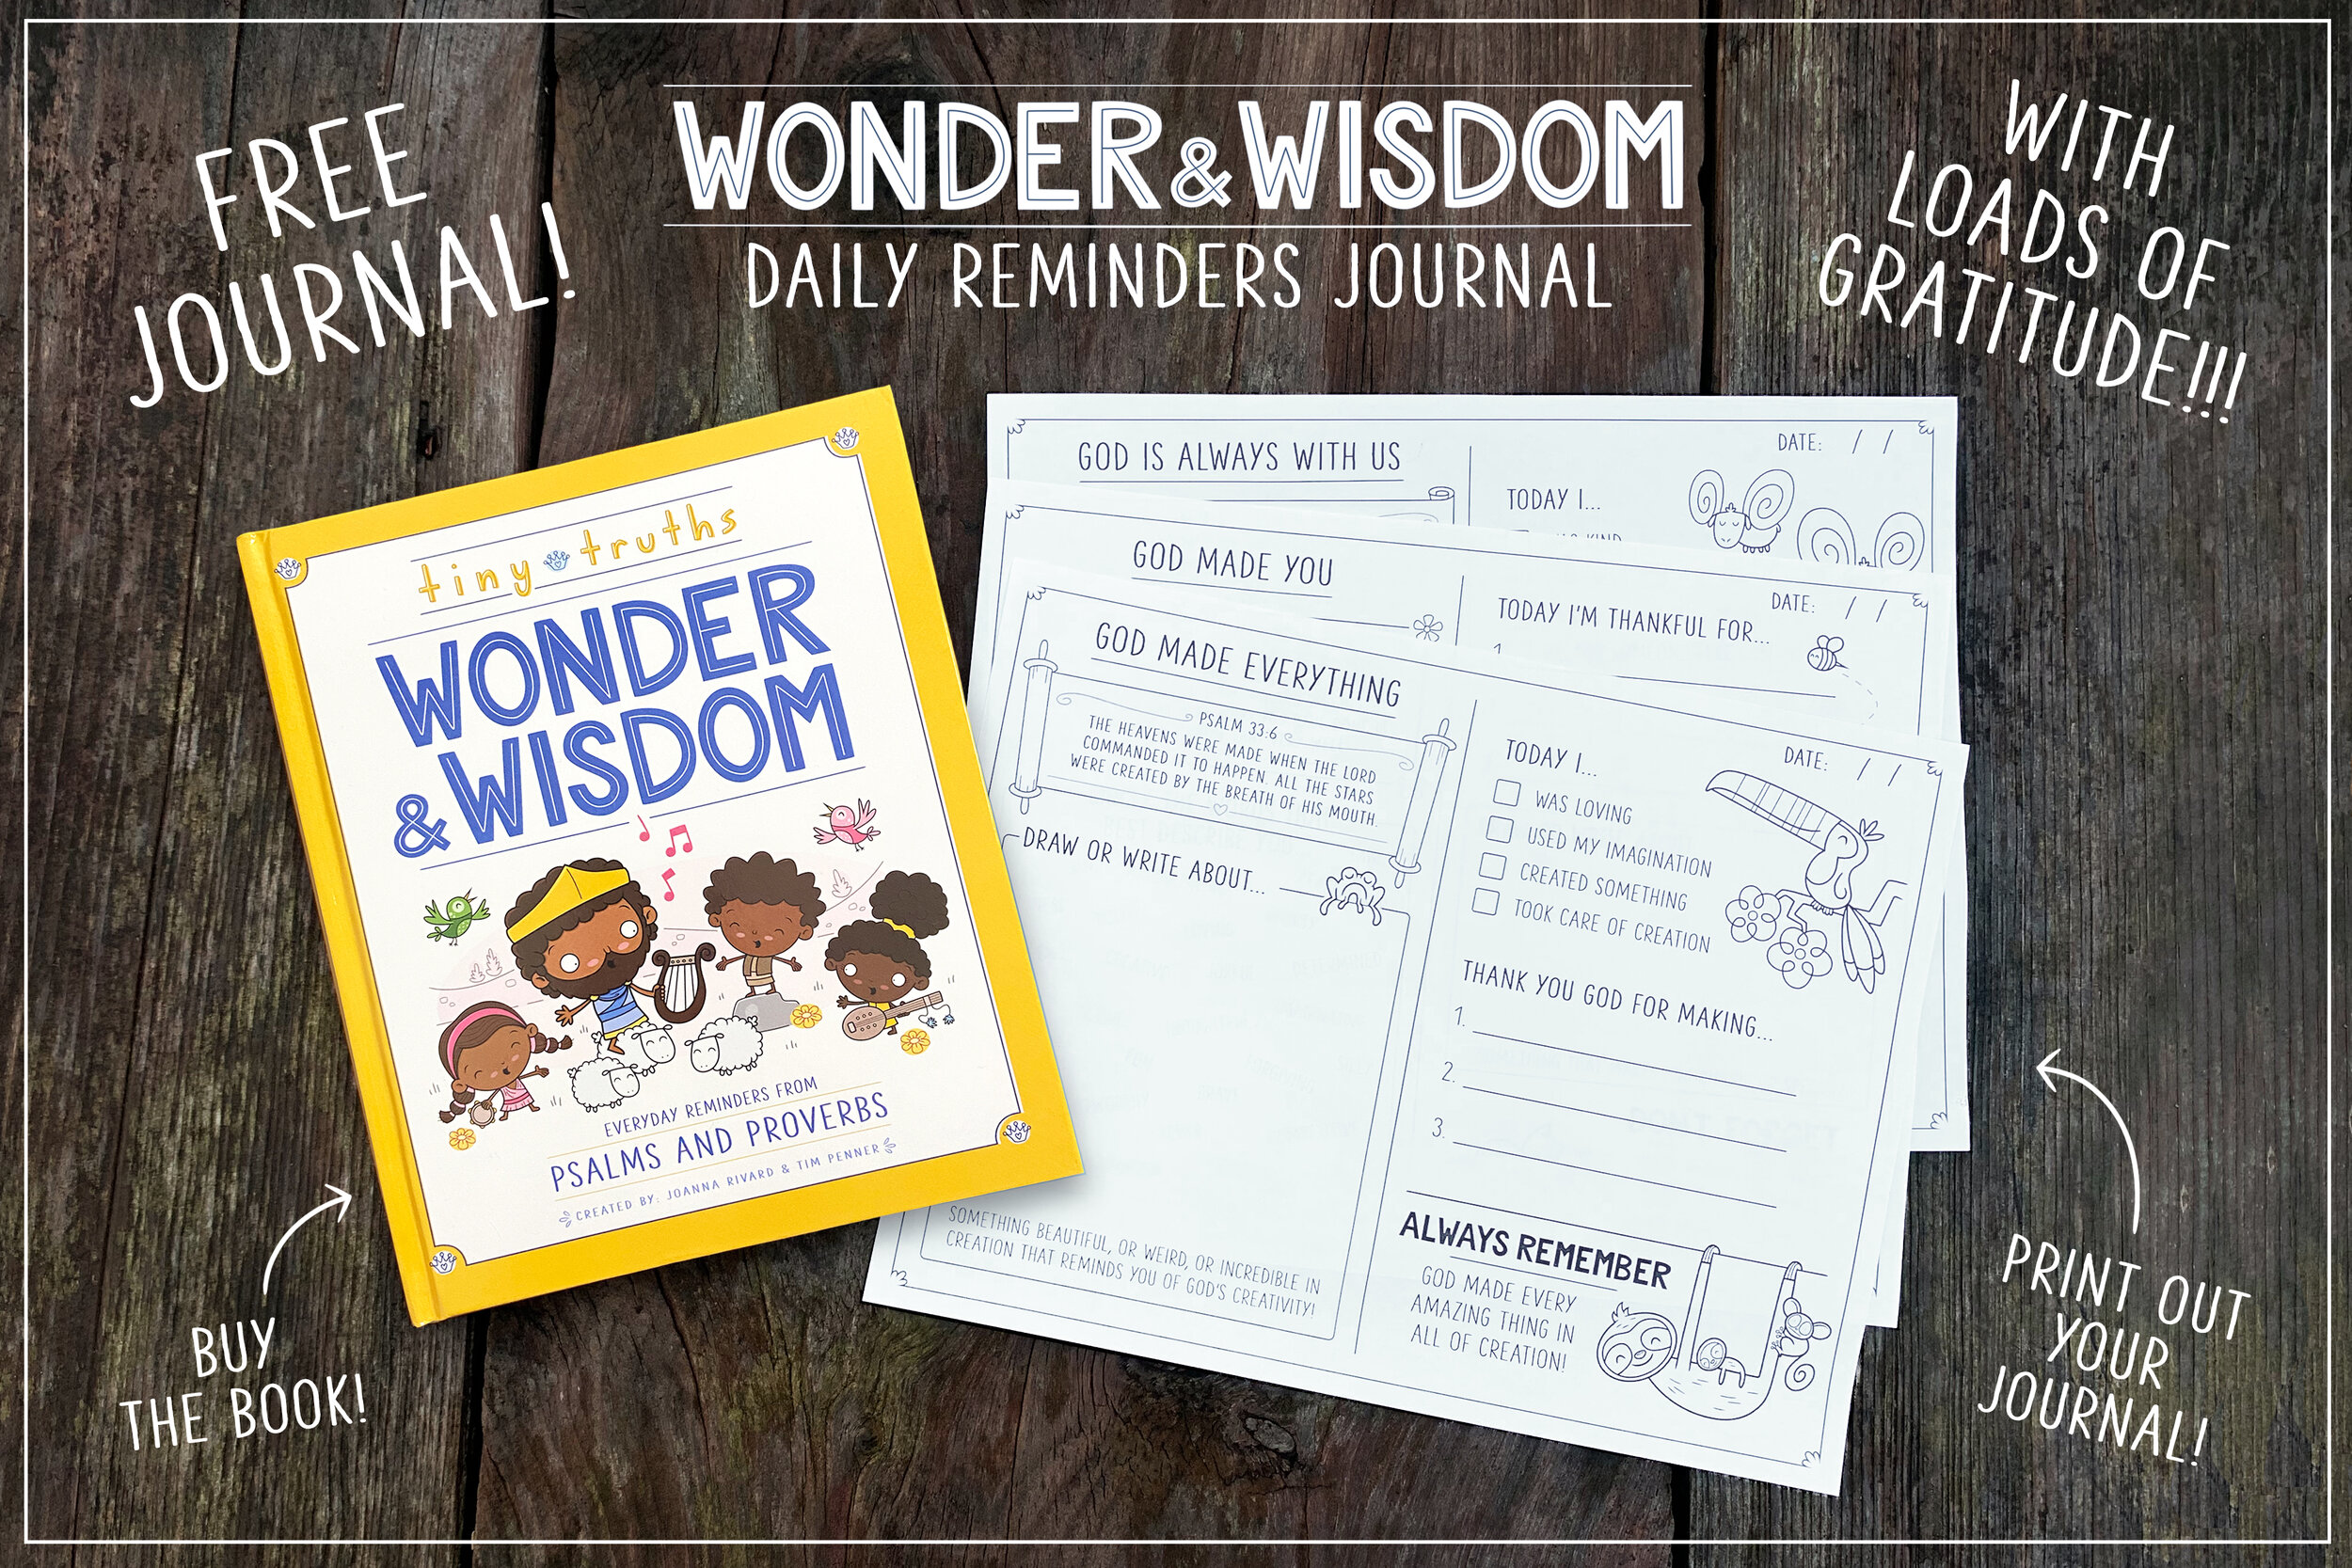 tiny truths wonder and wisdom daily reminders gratitude journal header.jpg